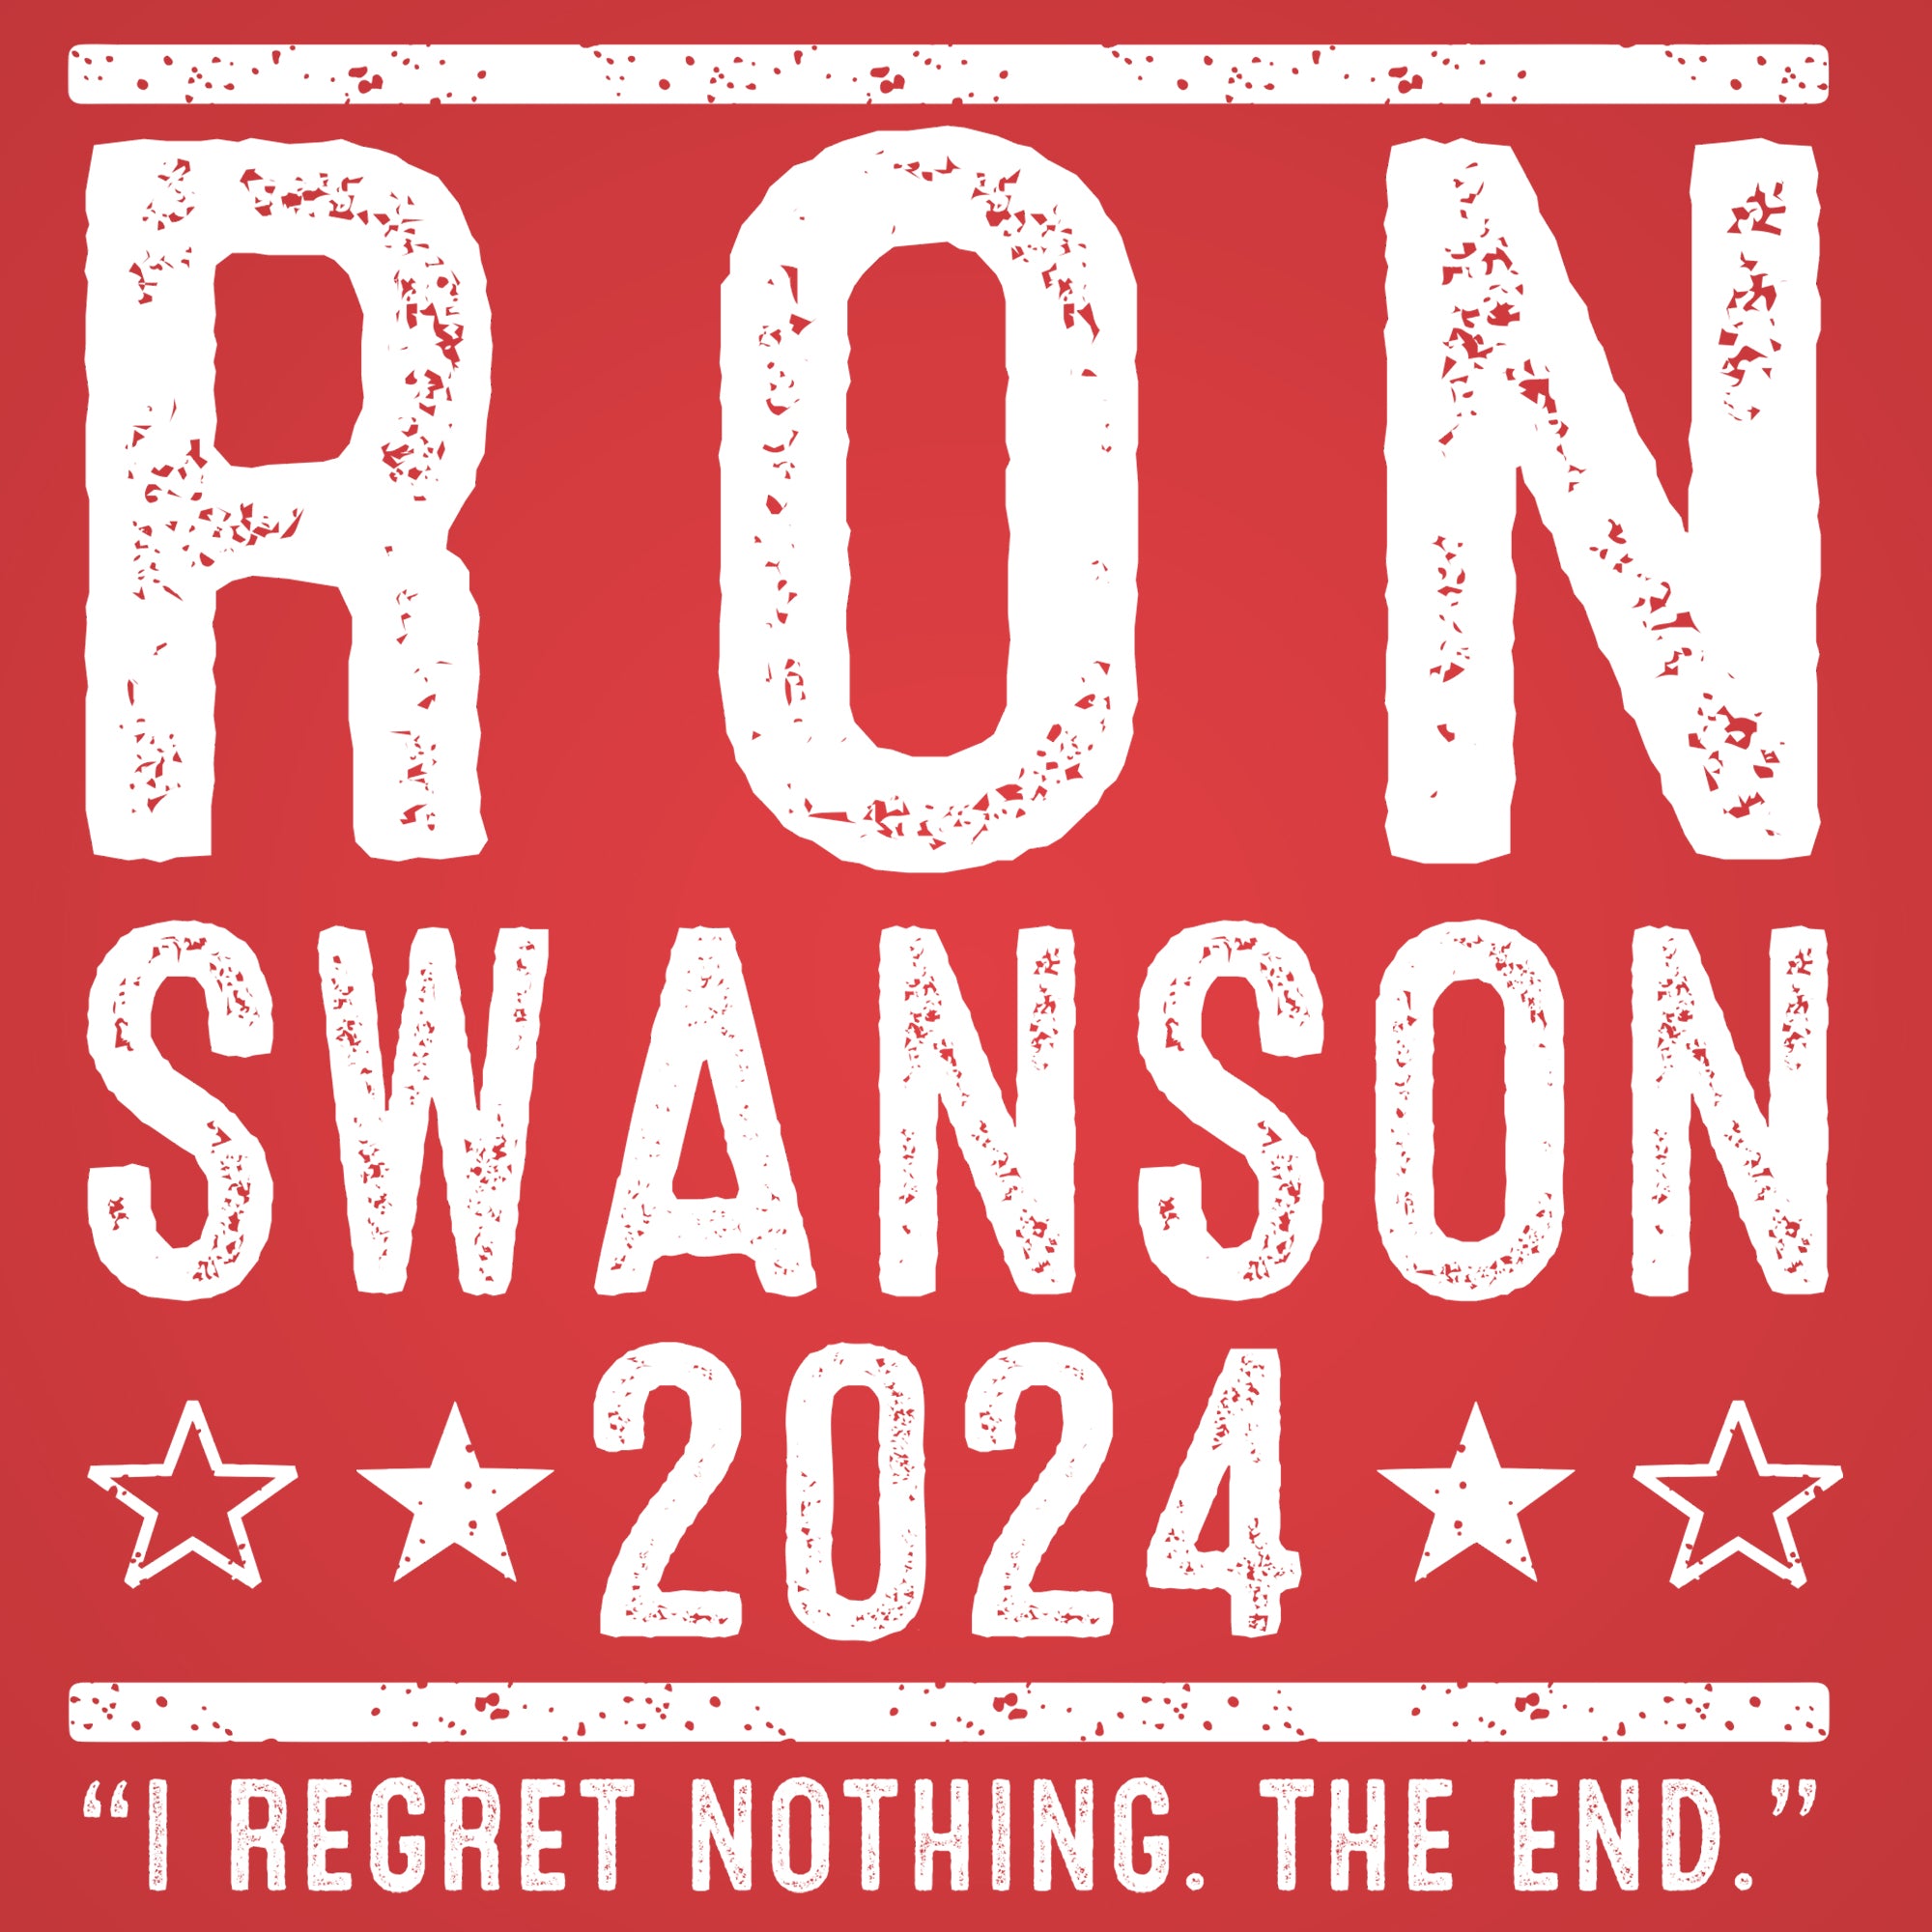 Ron Swanson 2024 Election Tshirt - Donkey Tees